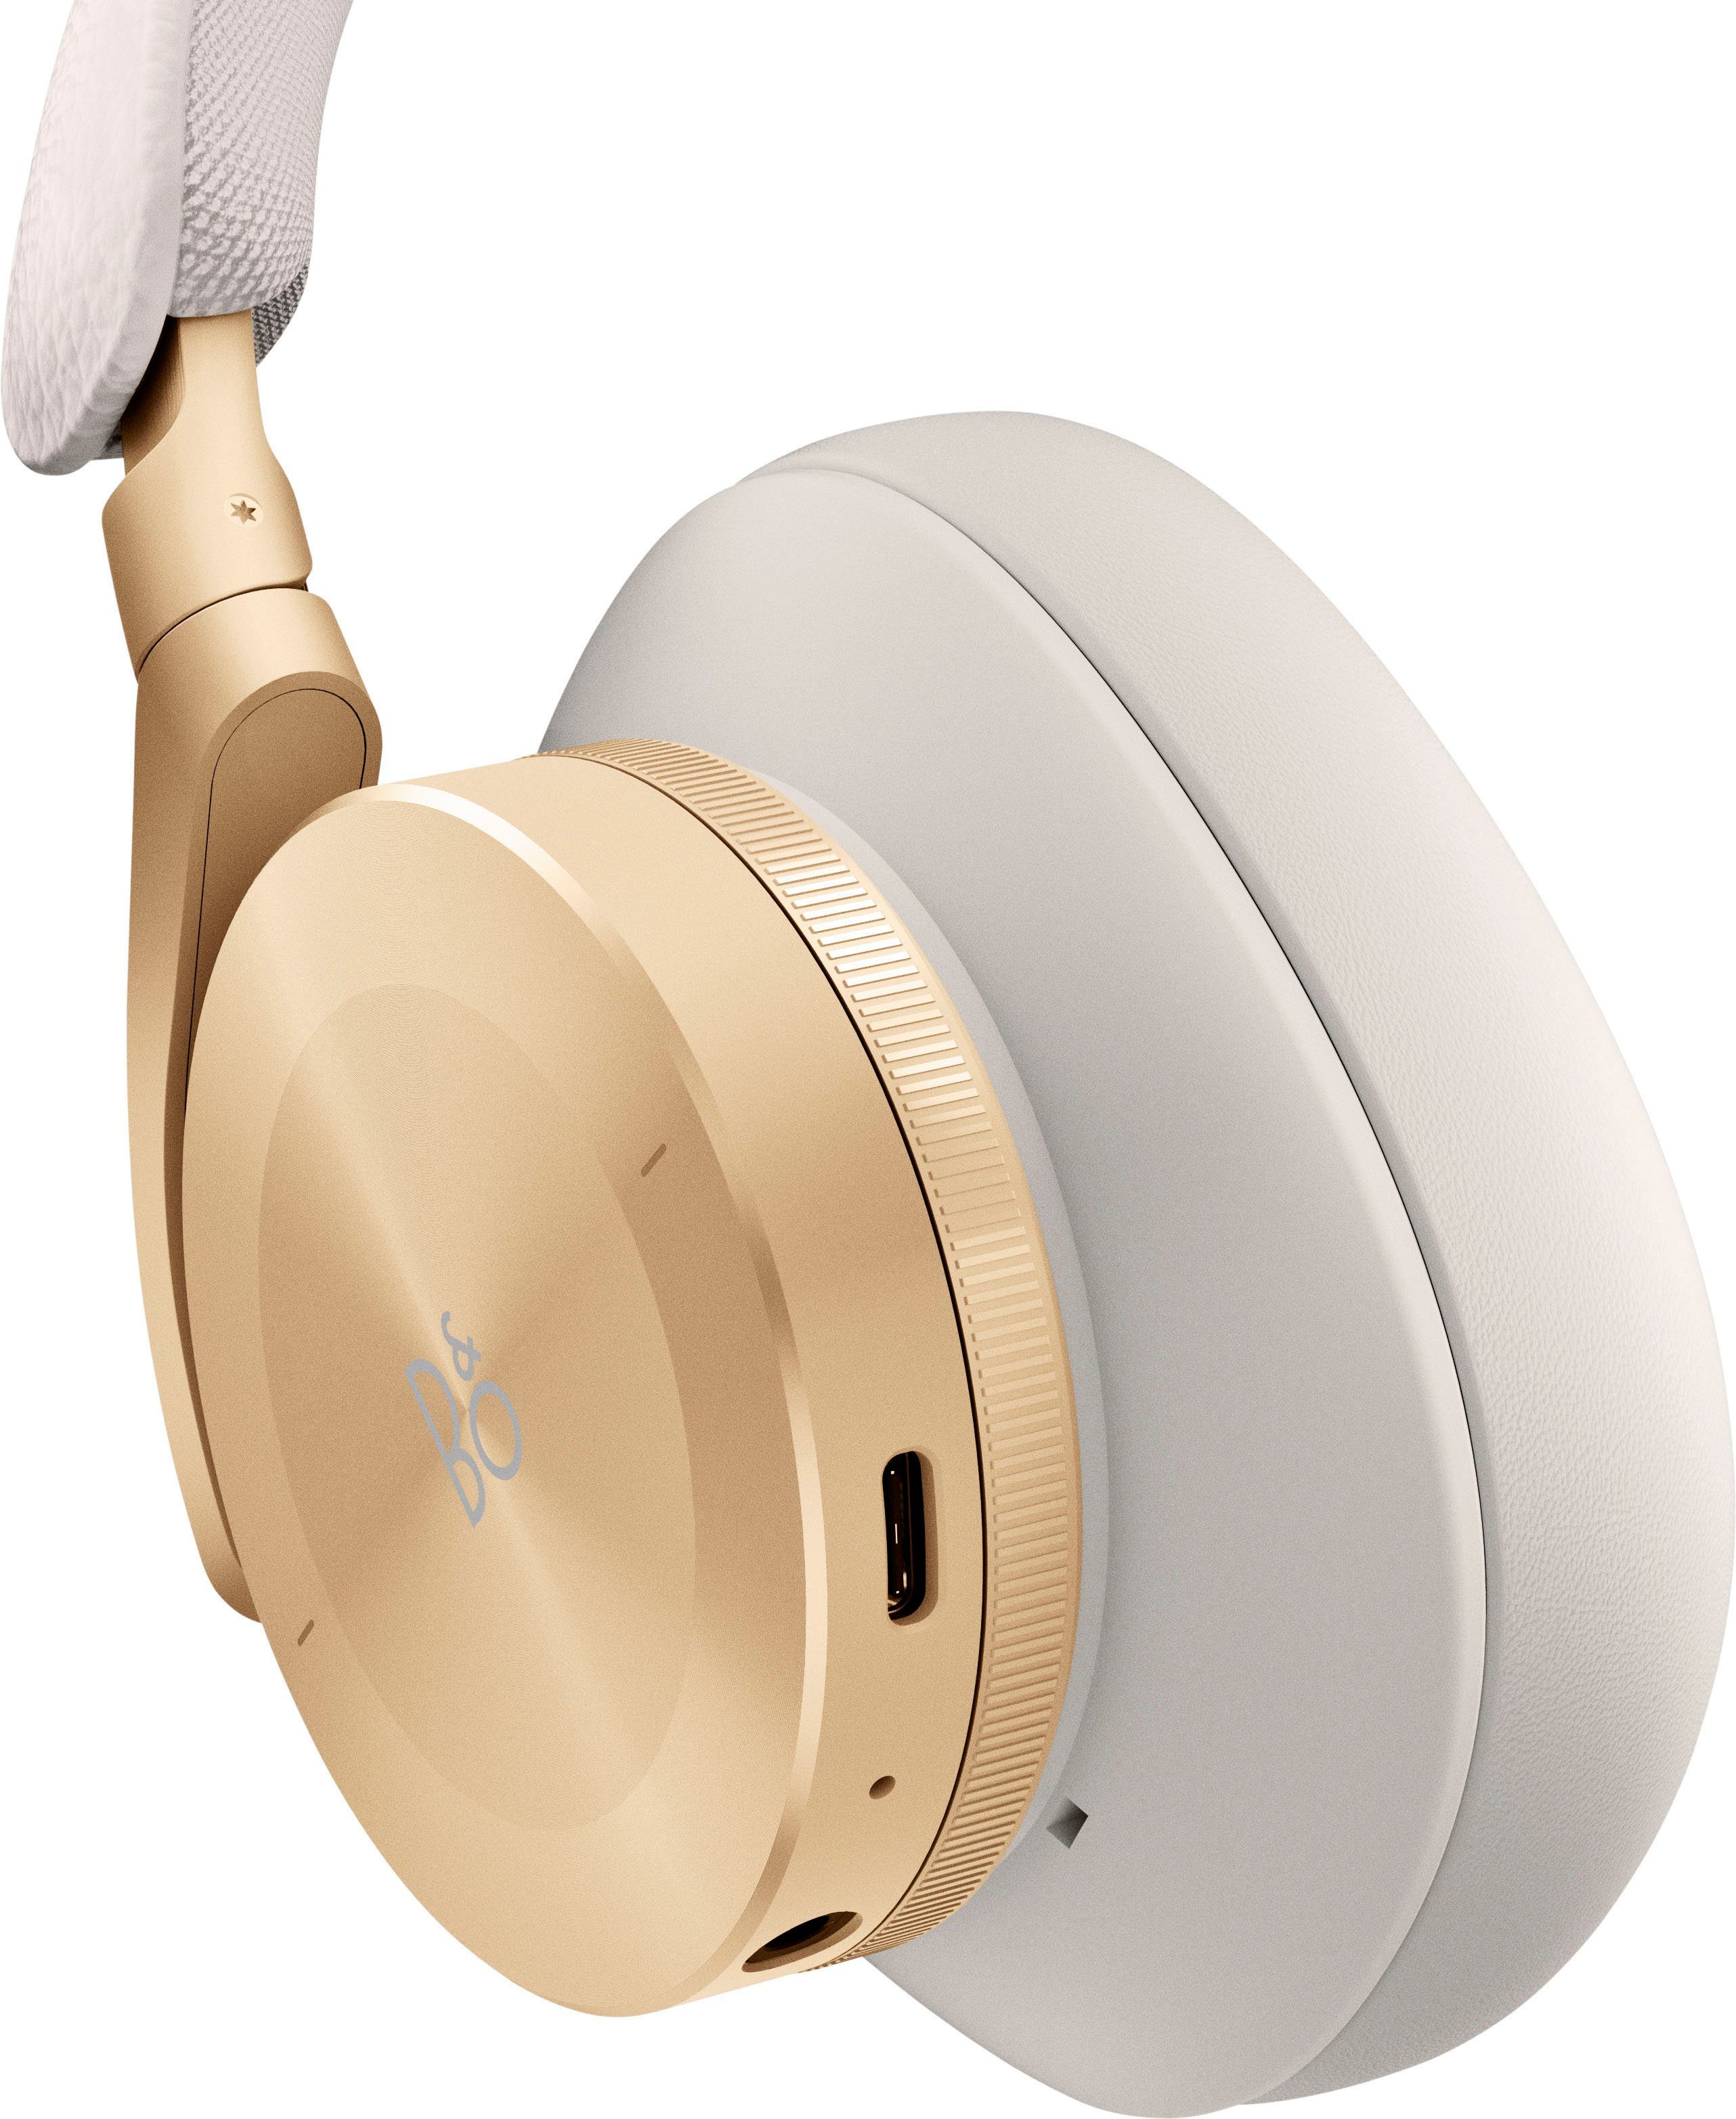 Bang & Active Transparenzmodus, Over-Ear-Kopfhörer Cancelling (ANC), LED Olufsen Gold Tone Ladestandsanzeige, Beoplay Freisprechfunktion, Bluetooth) H95 Noise Sprachsteuerung, (AN-Funktionen, Geräuschisolierung